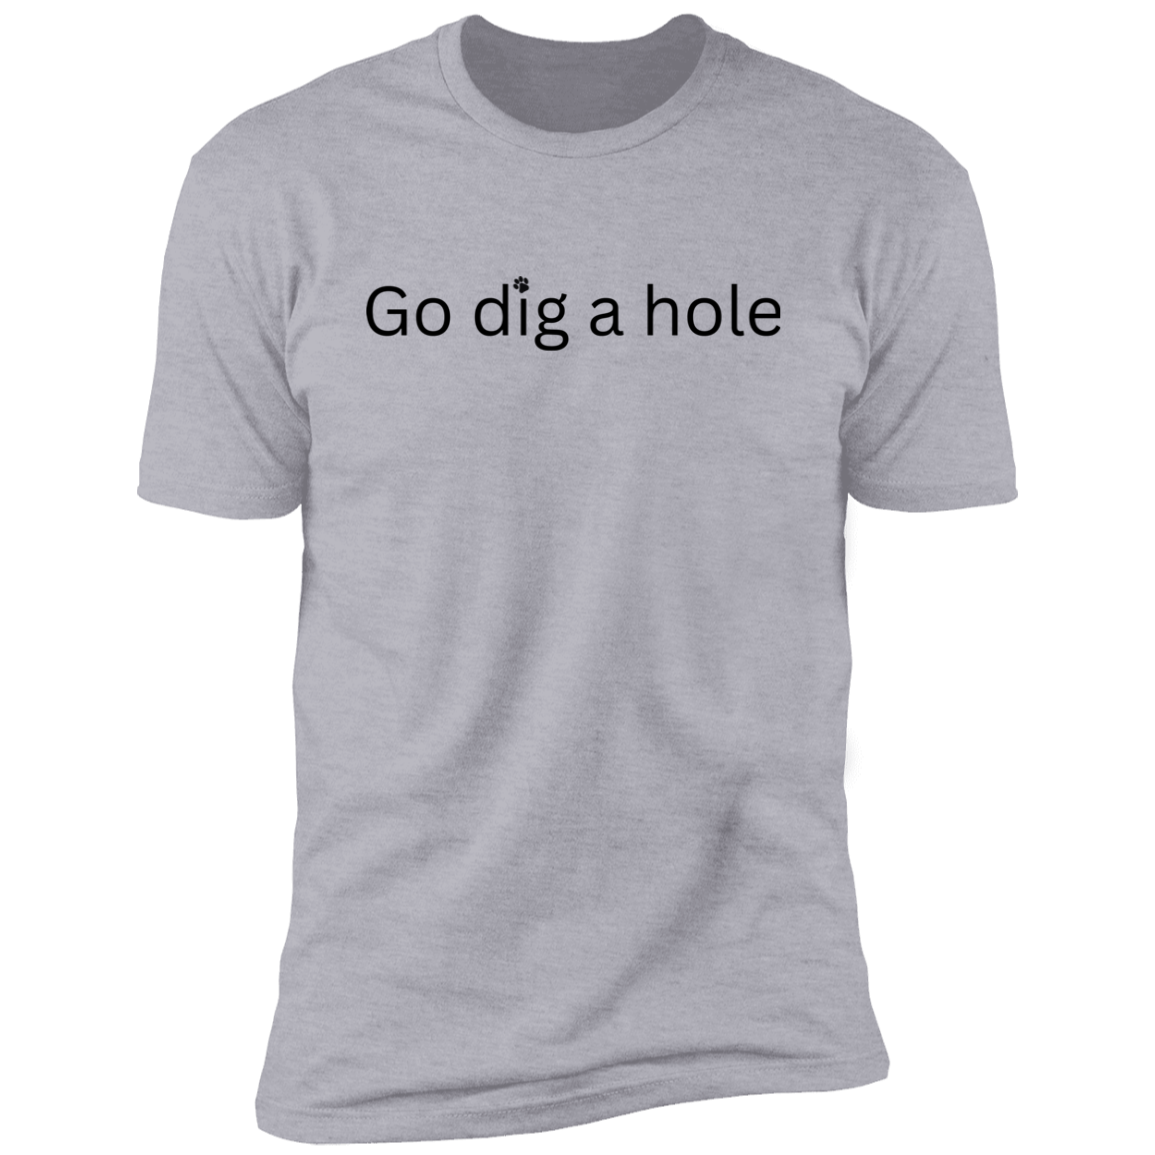 Go Dig a Hole Dog T-Shirt, Dog shirt for humans, funny dog shirt, funny t-shirt, in heather gray